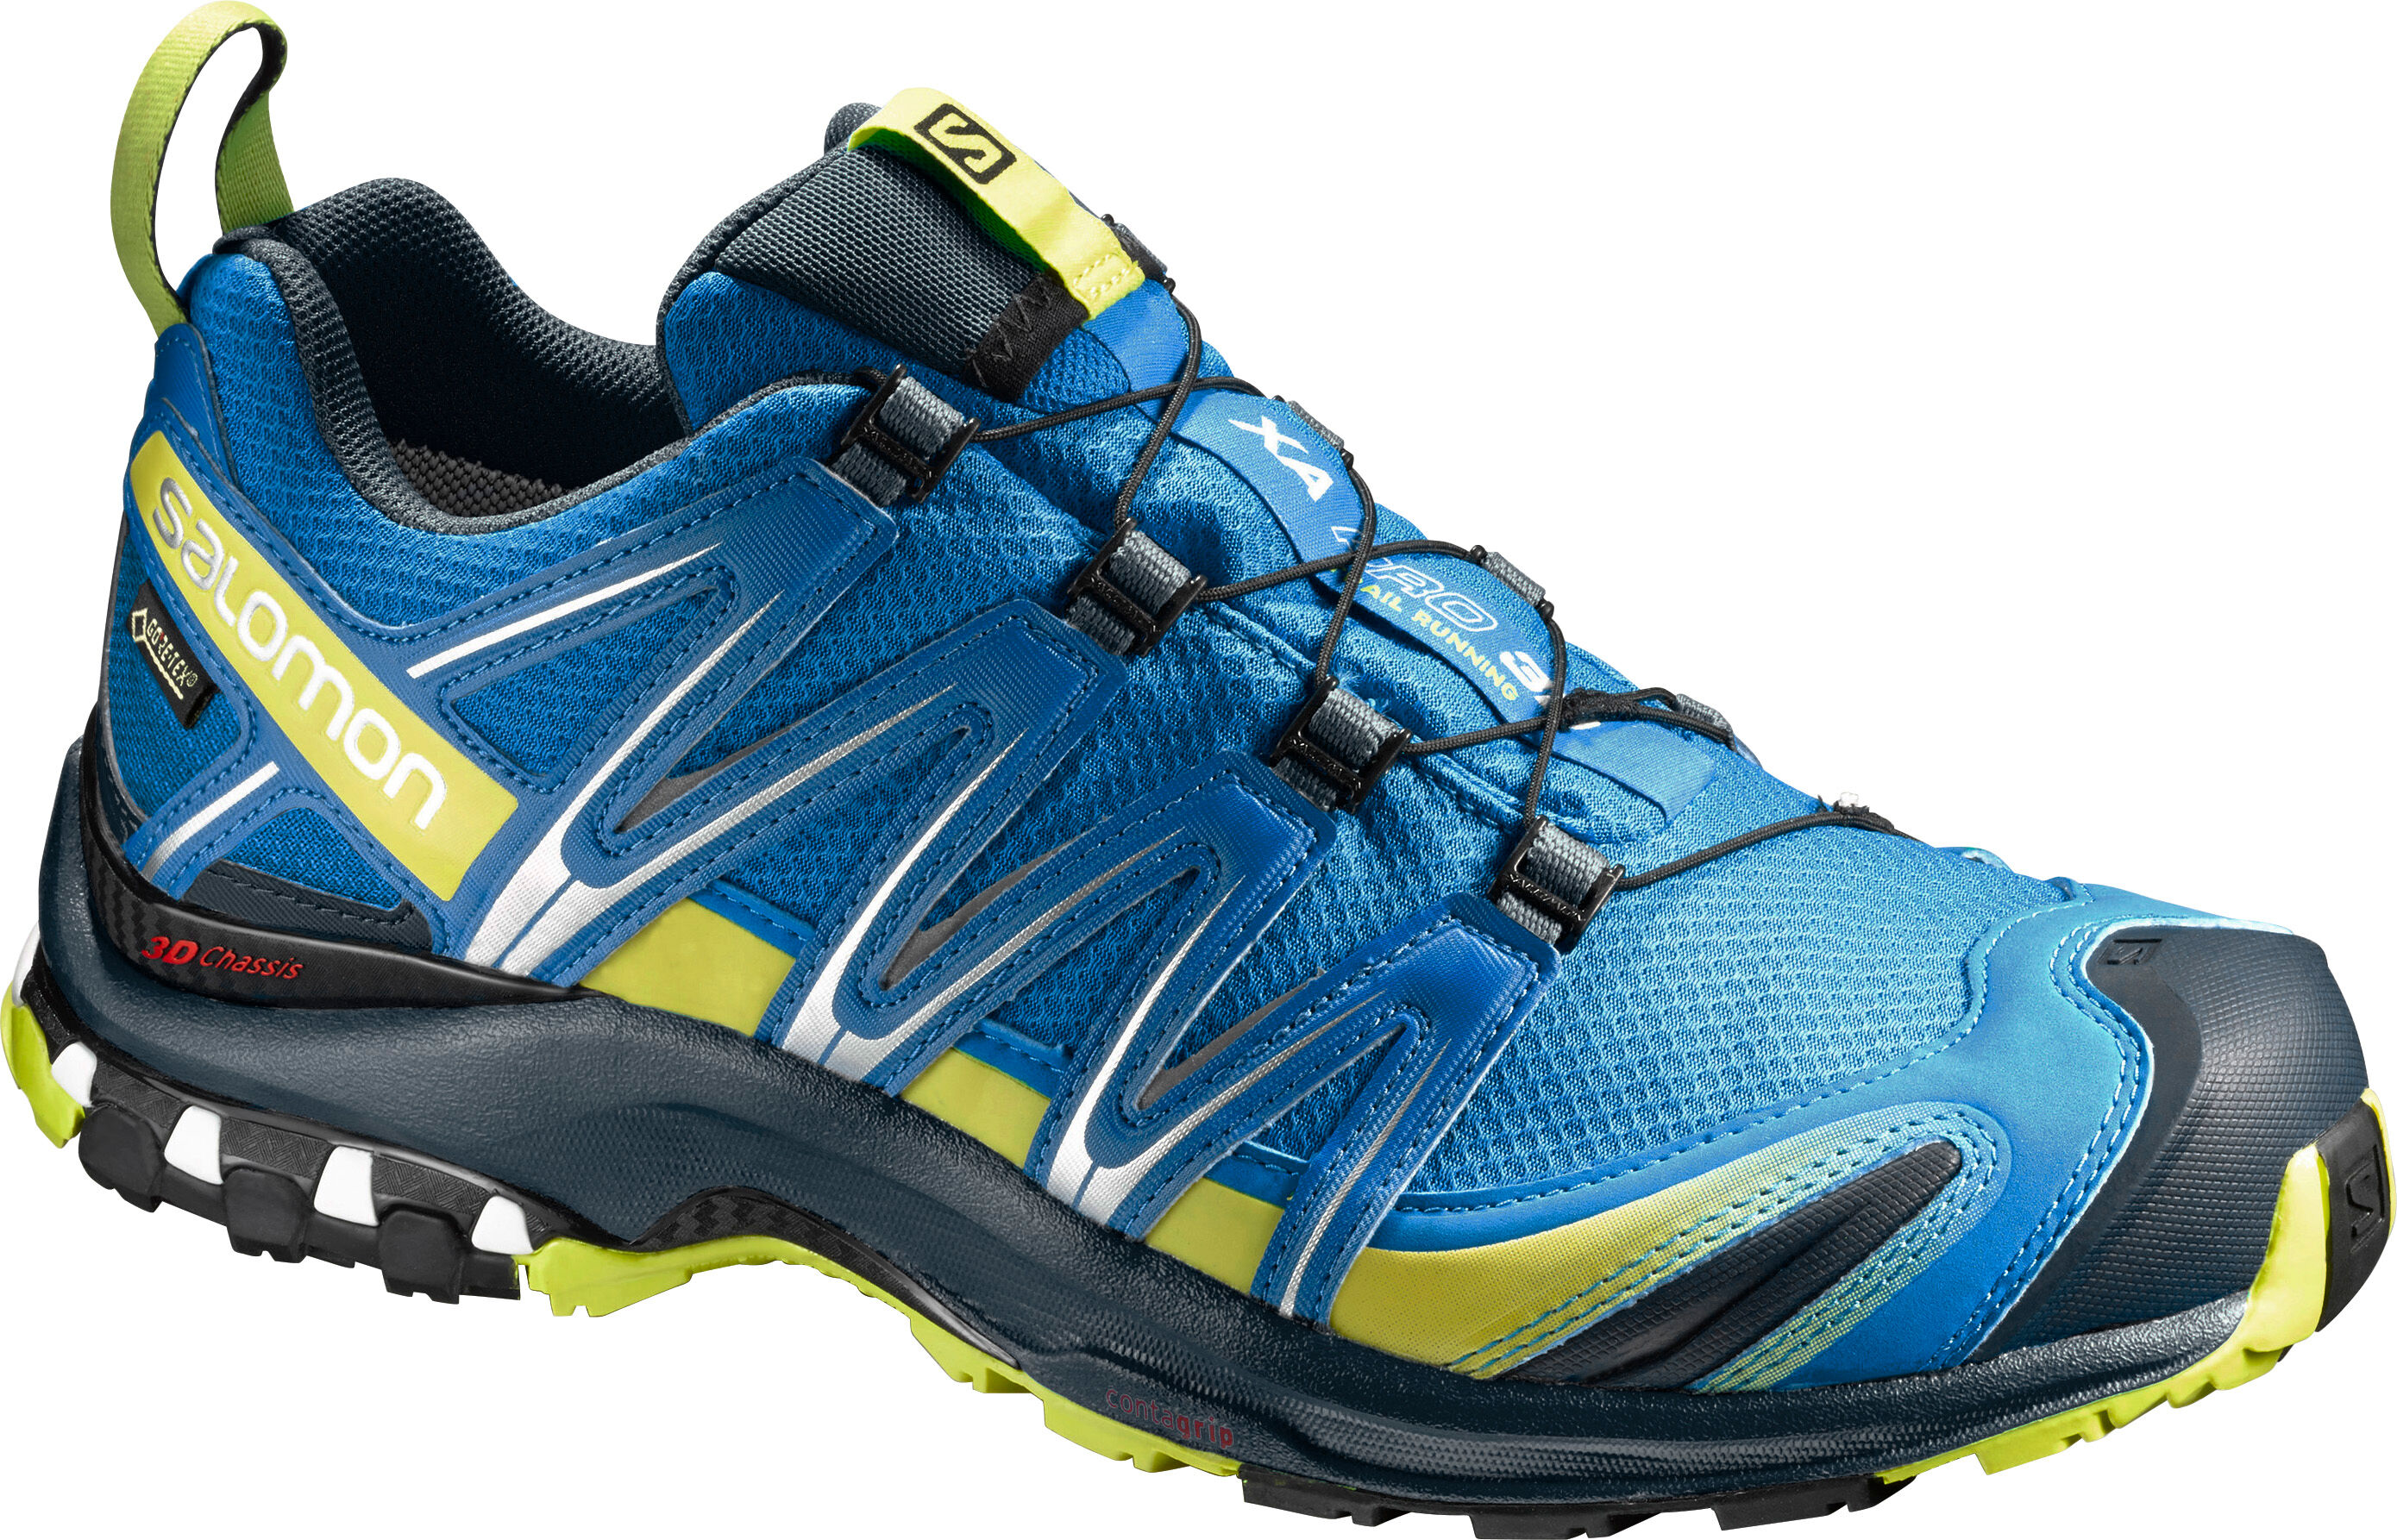 Salomon - XA Pro 3D GTX® - Walking Boots - Men's